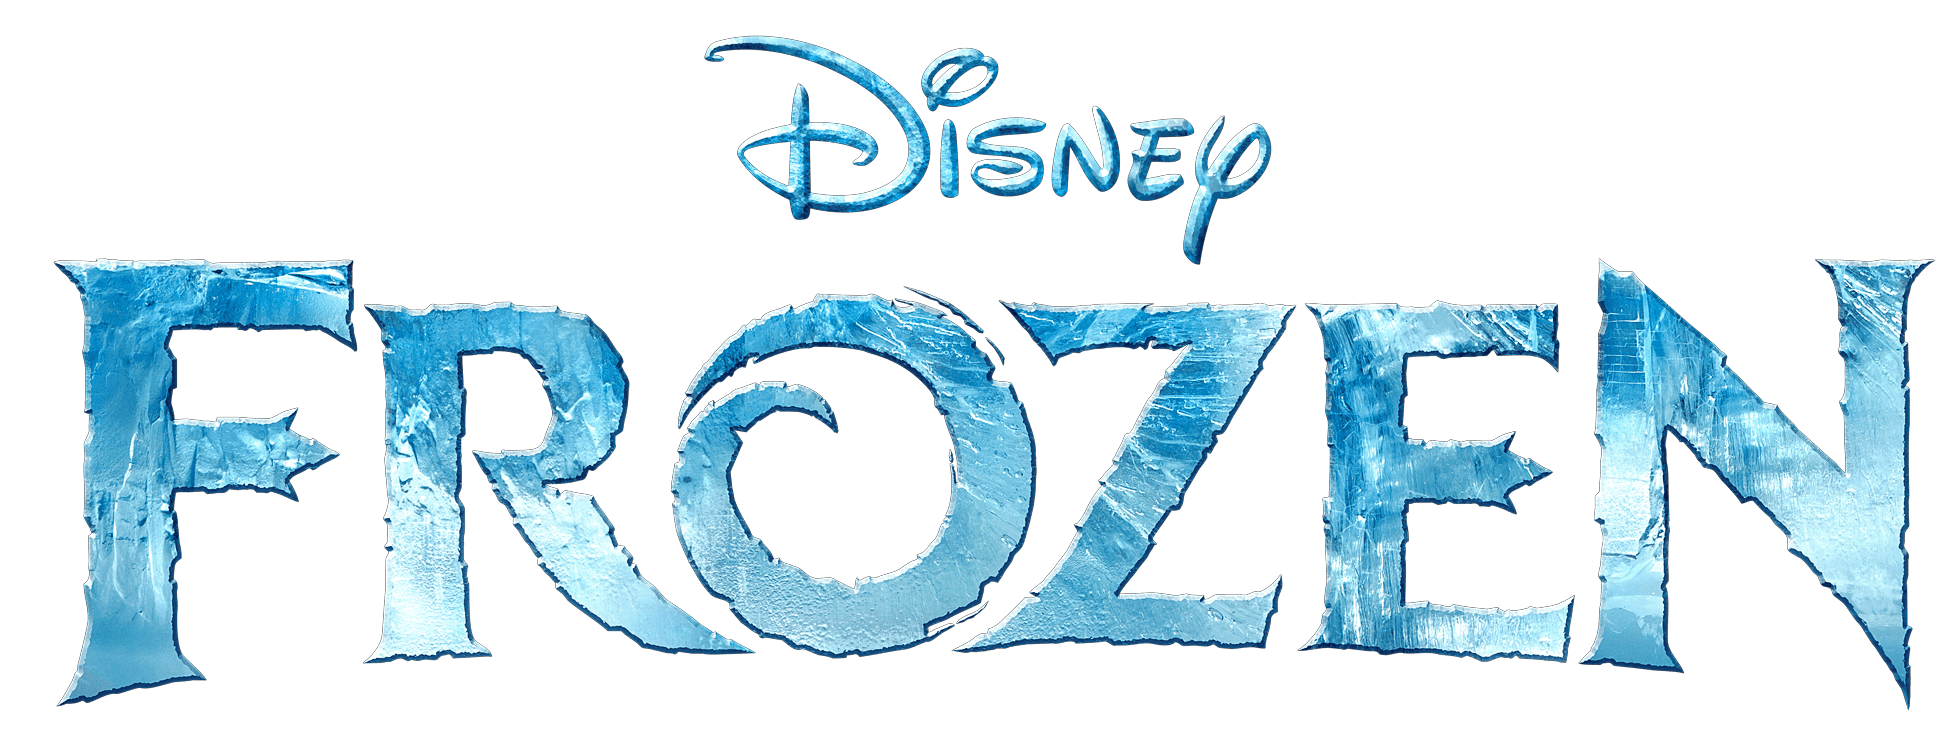 Disney-frozen-logoX7waSdzBRdbLF